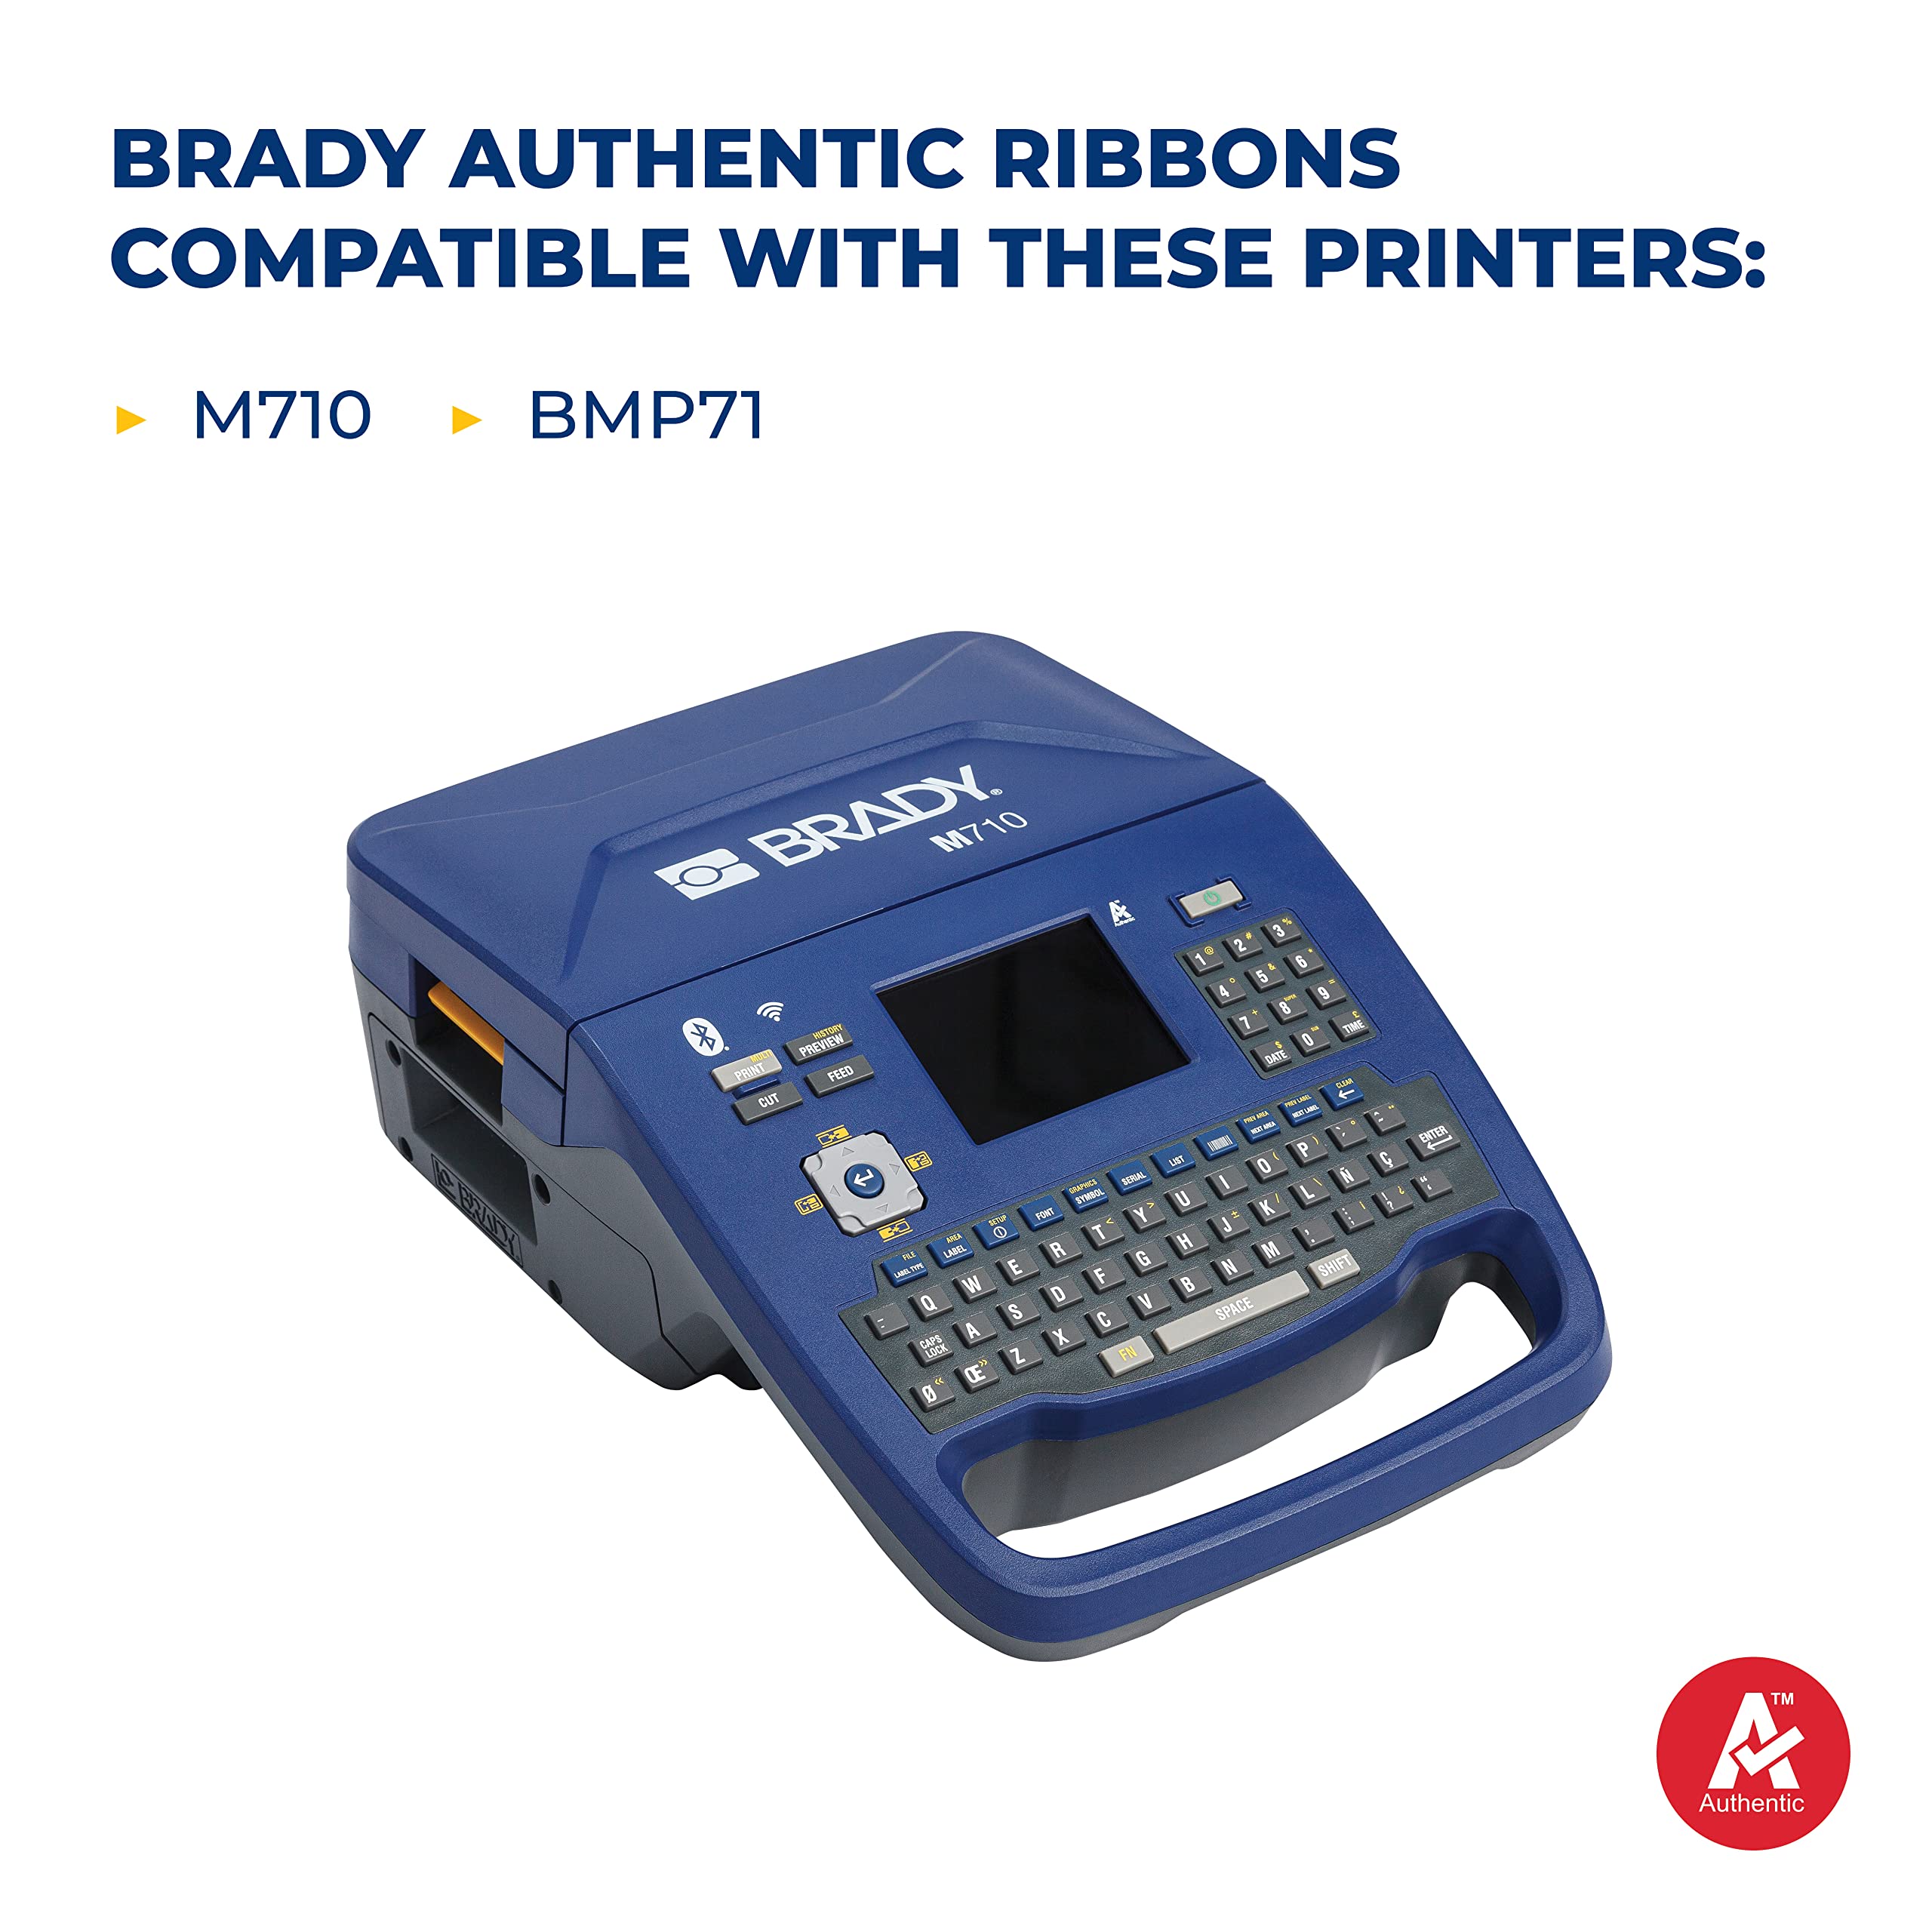 Brady (M7-R6000) Printer Ribbon - R6000 Series Halogen Free Ribbon for BMP71 and M710 Printers - Black, Roll of 150 Feet